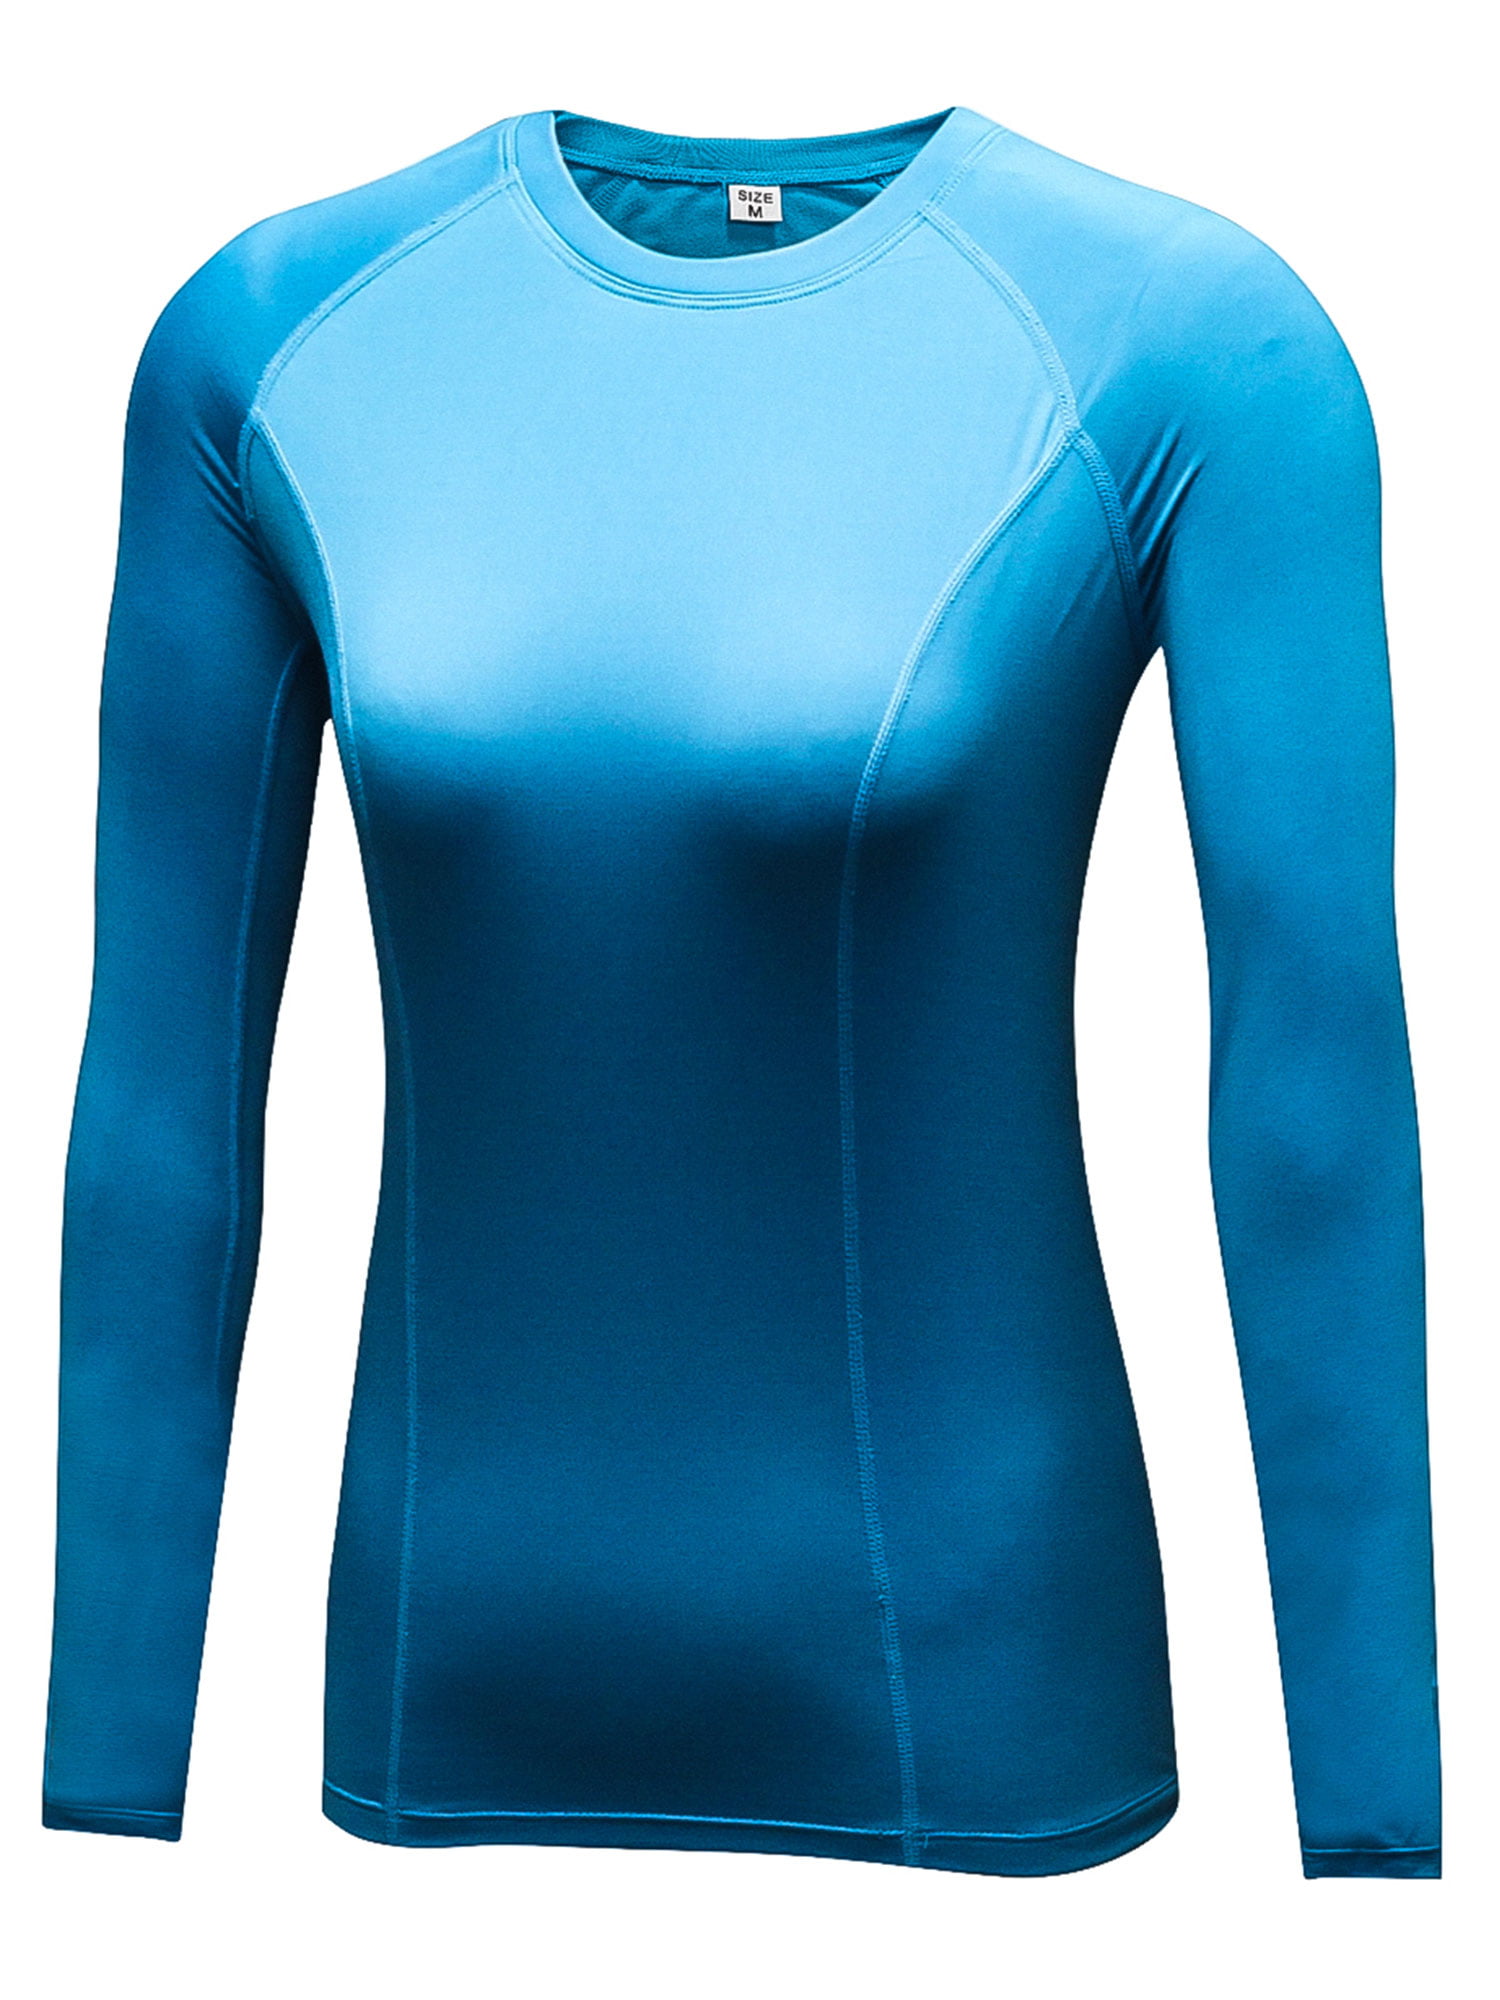 Meraki Women's Long Sleeve Compression Top Gym Yoga Running Shirt Base Layer 